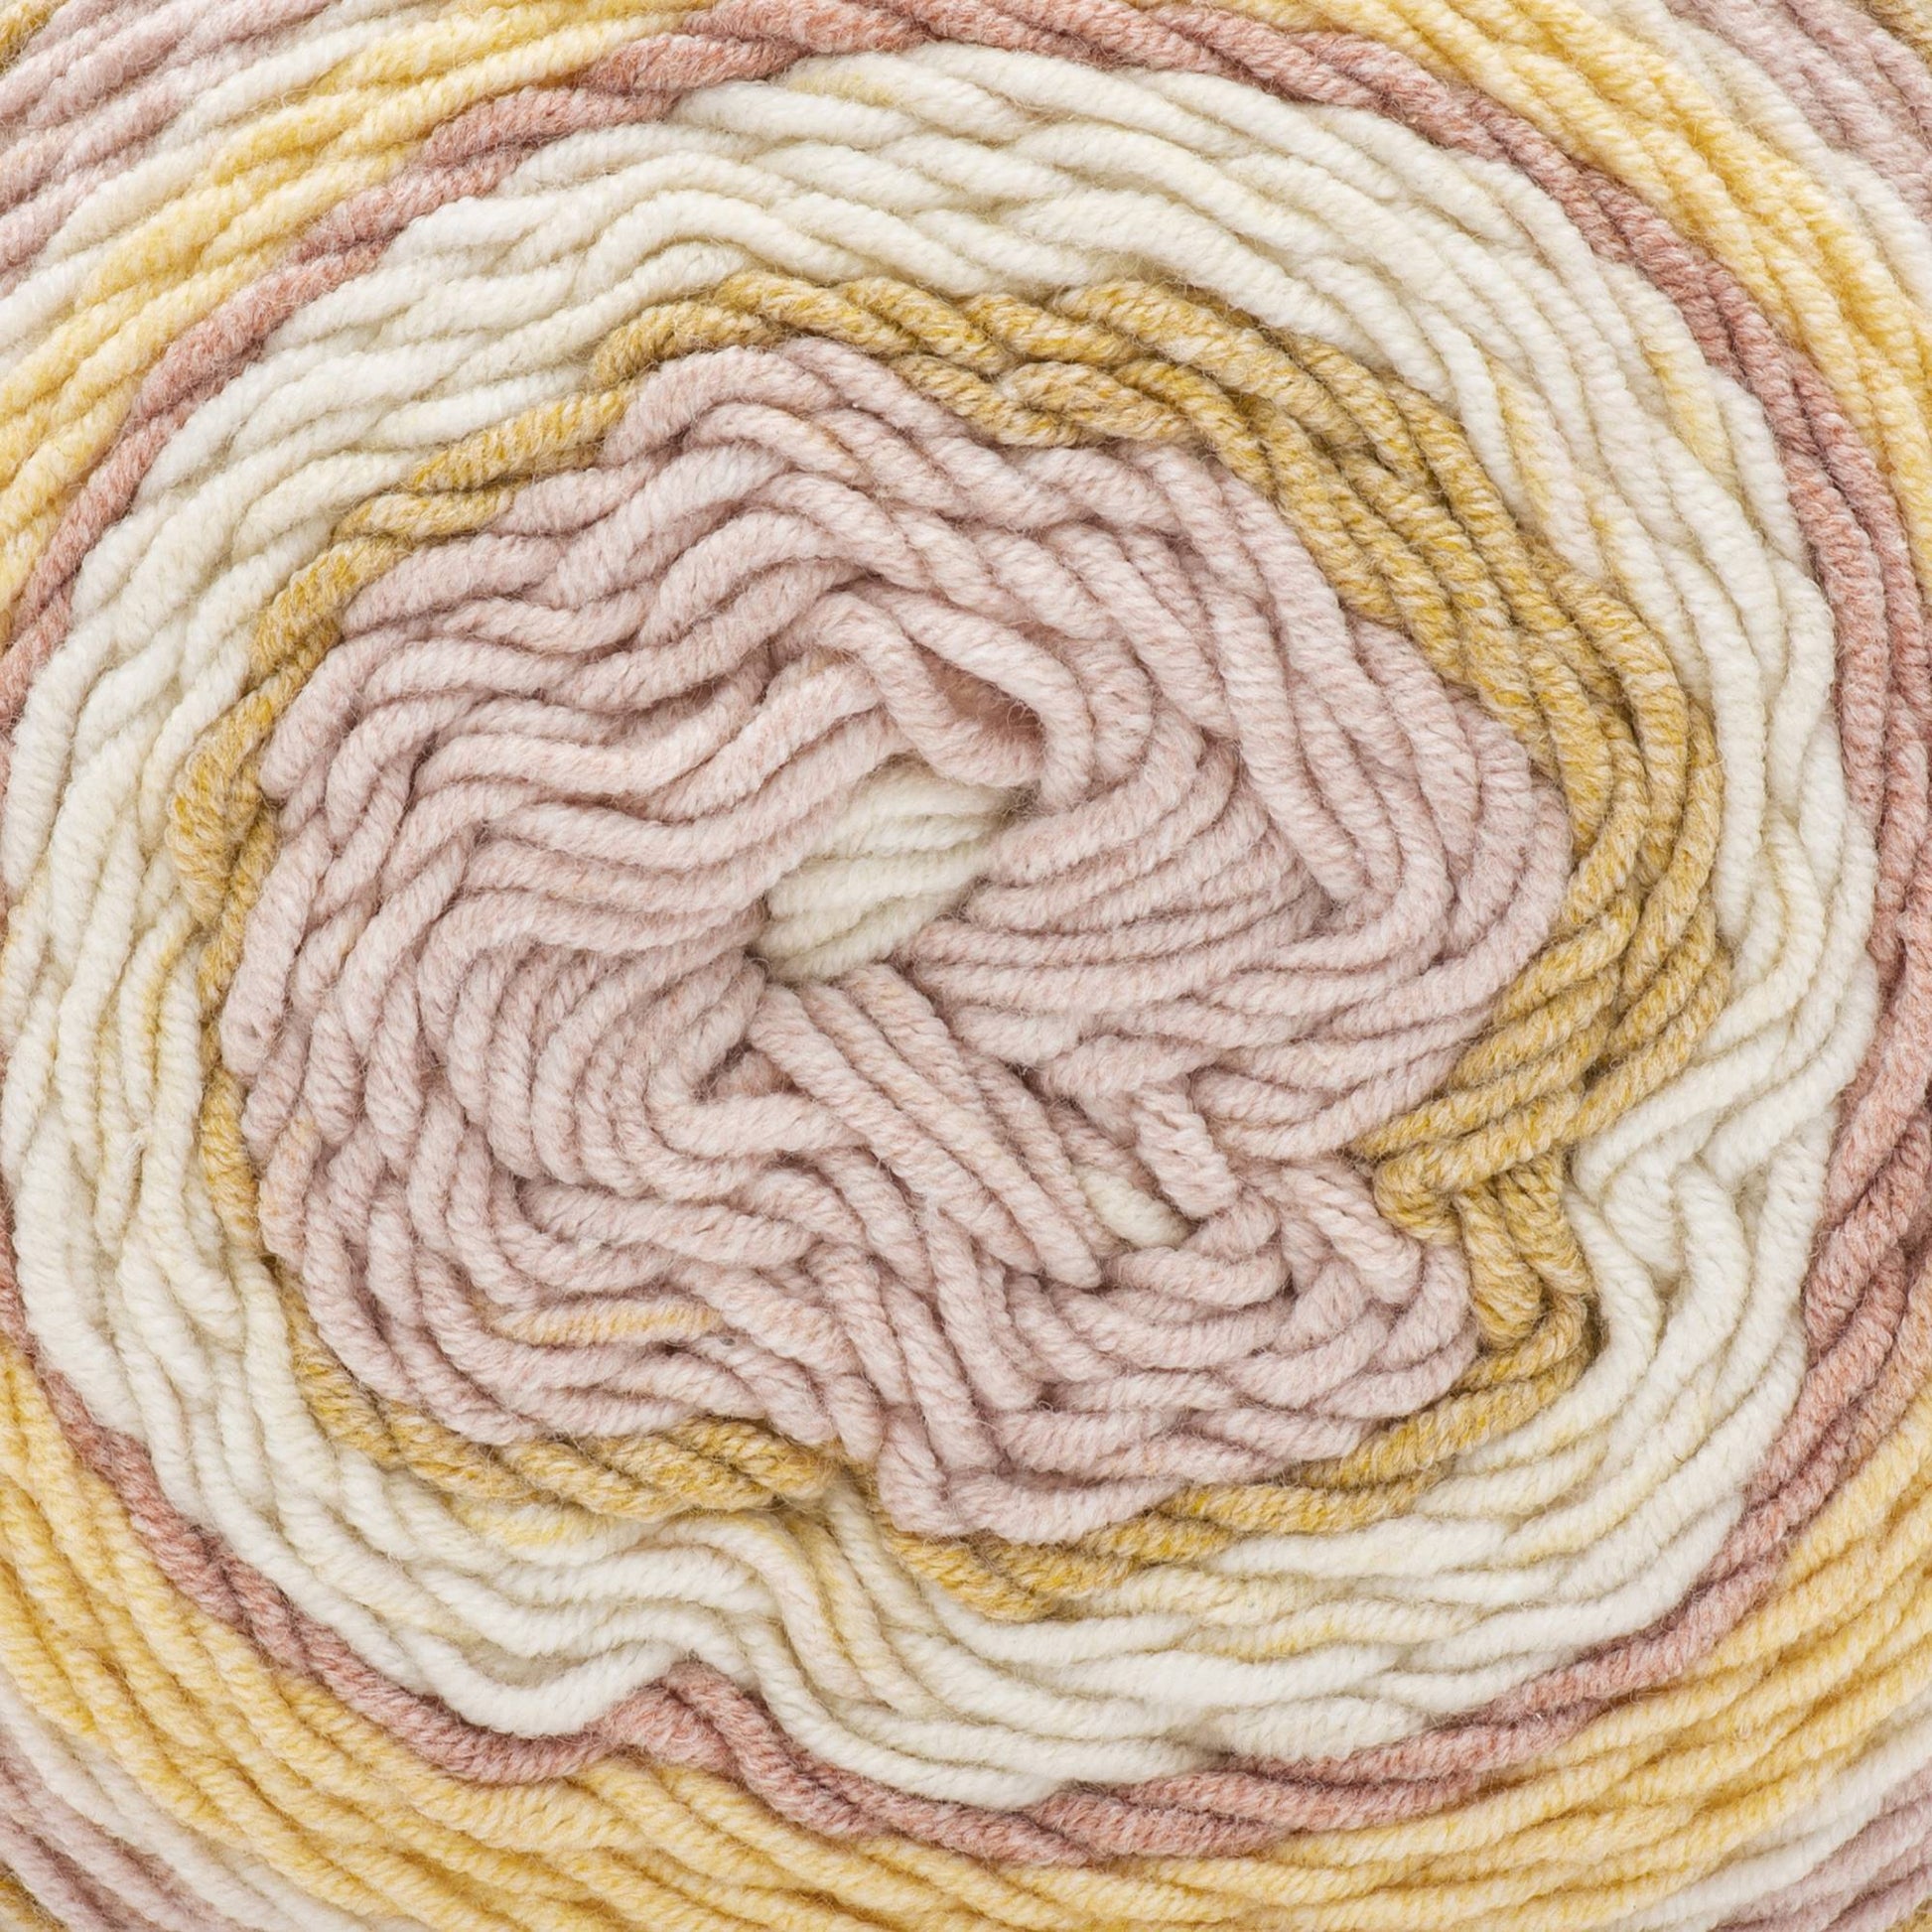 Caron Cotton Painterly Cakes Yarn - Clearance Shades